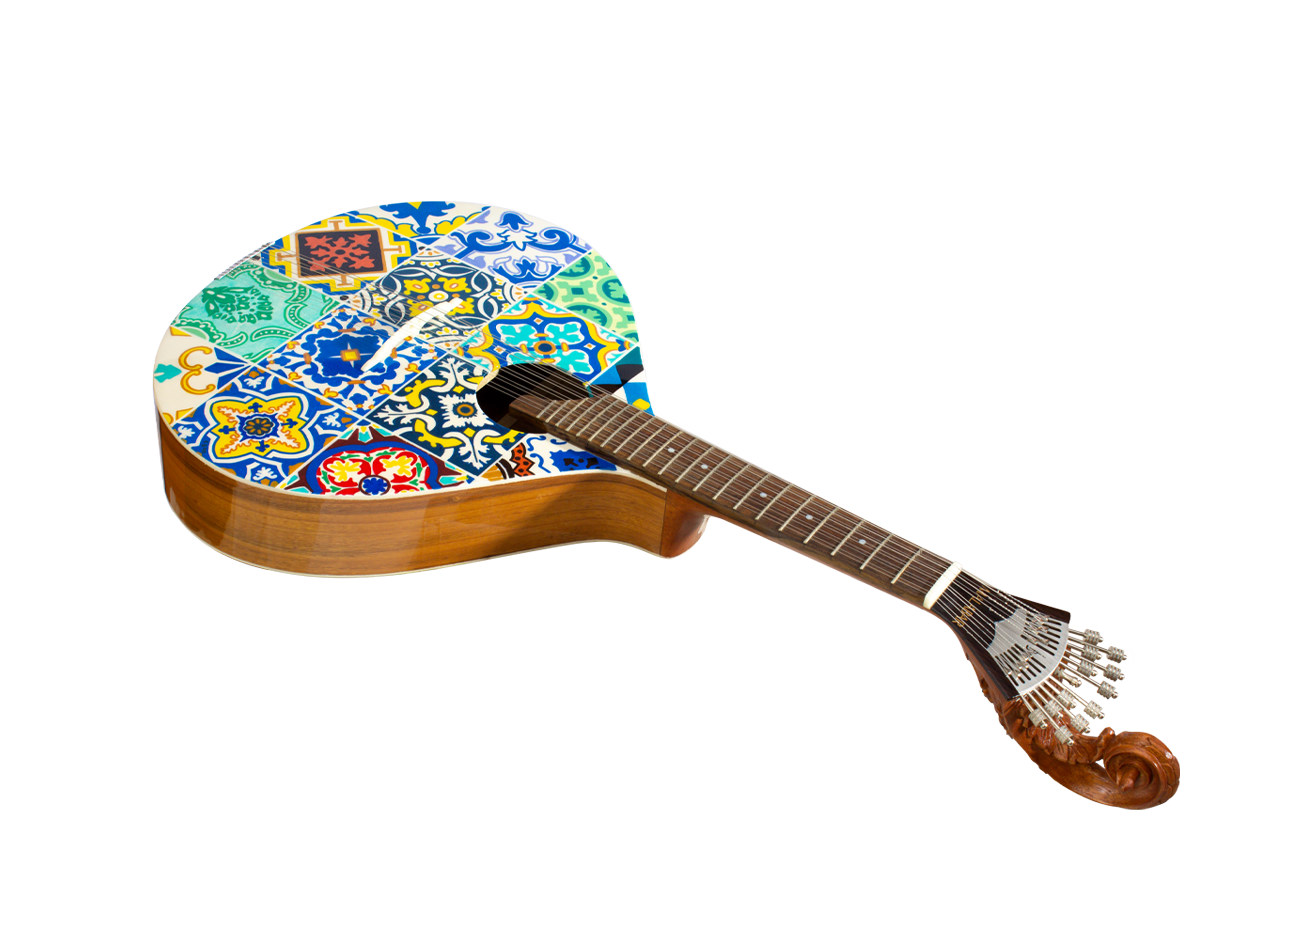 Azulejo guitar ii